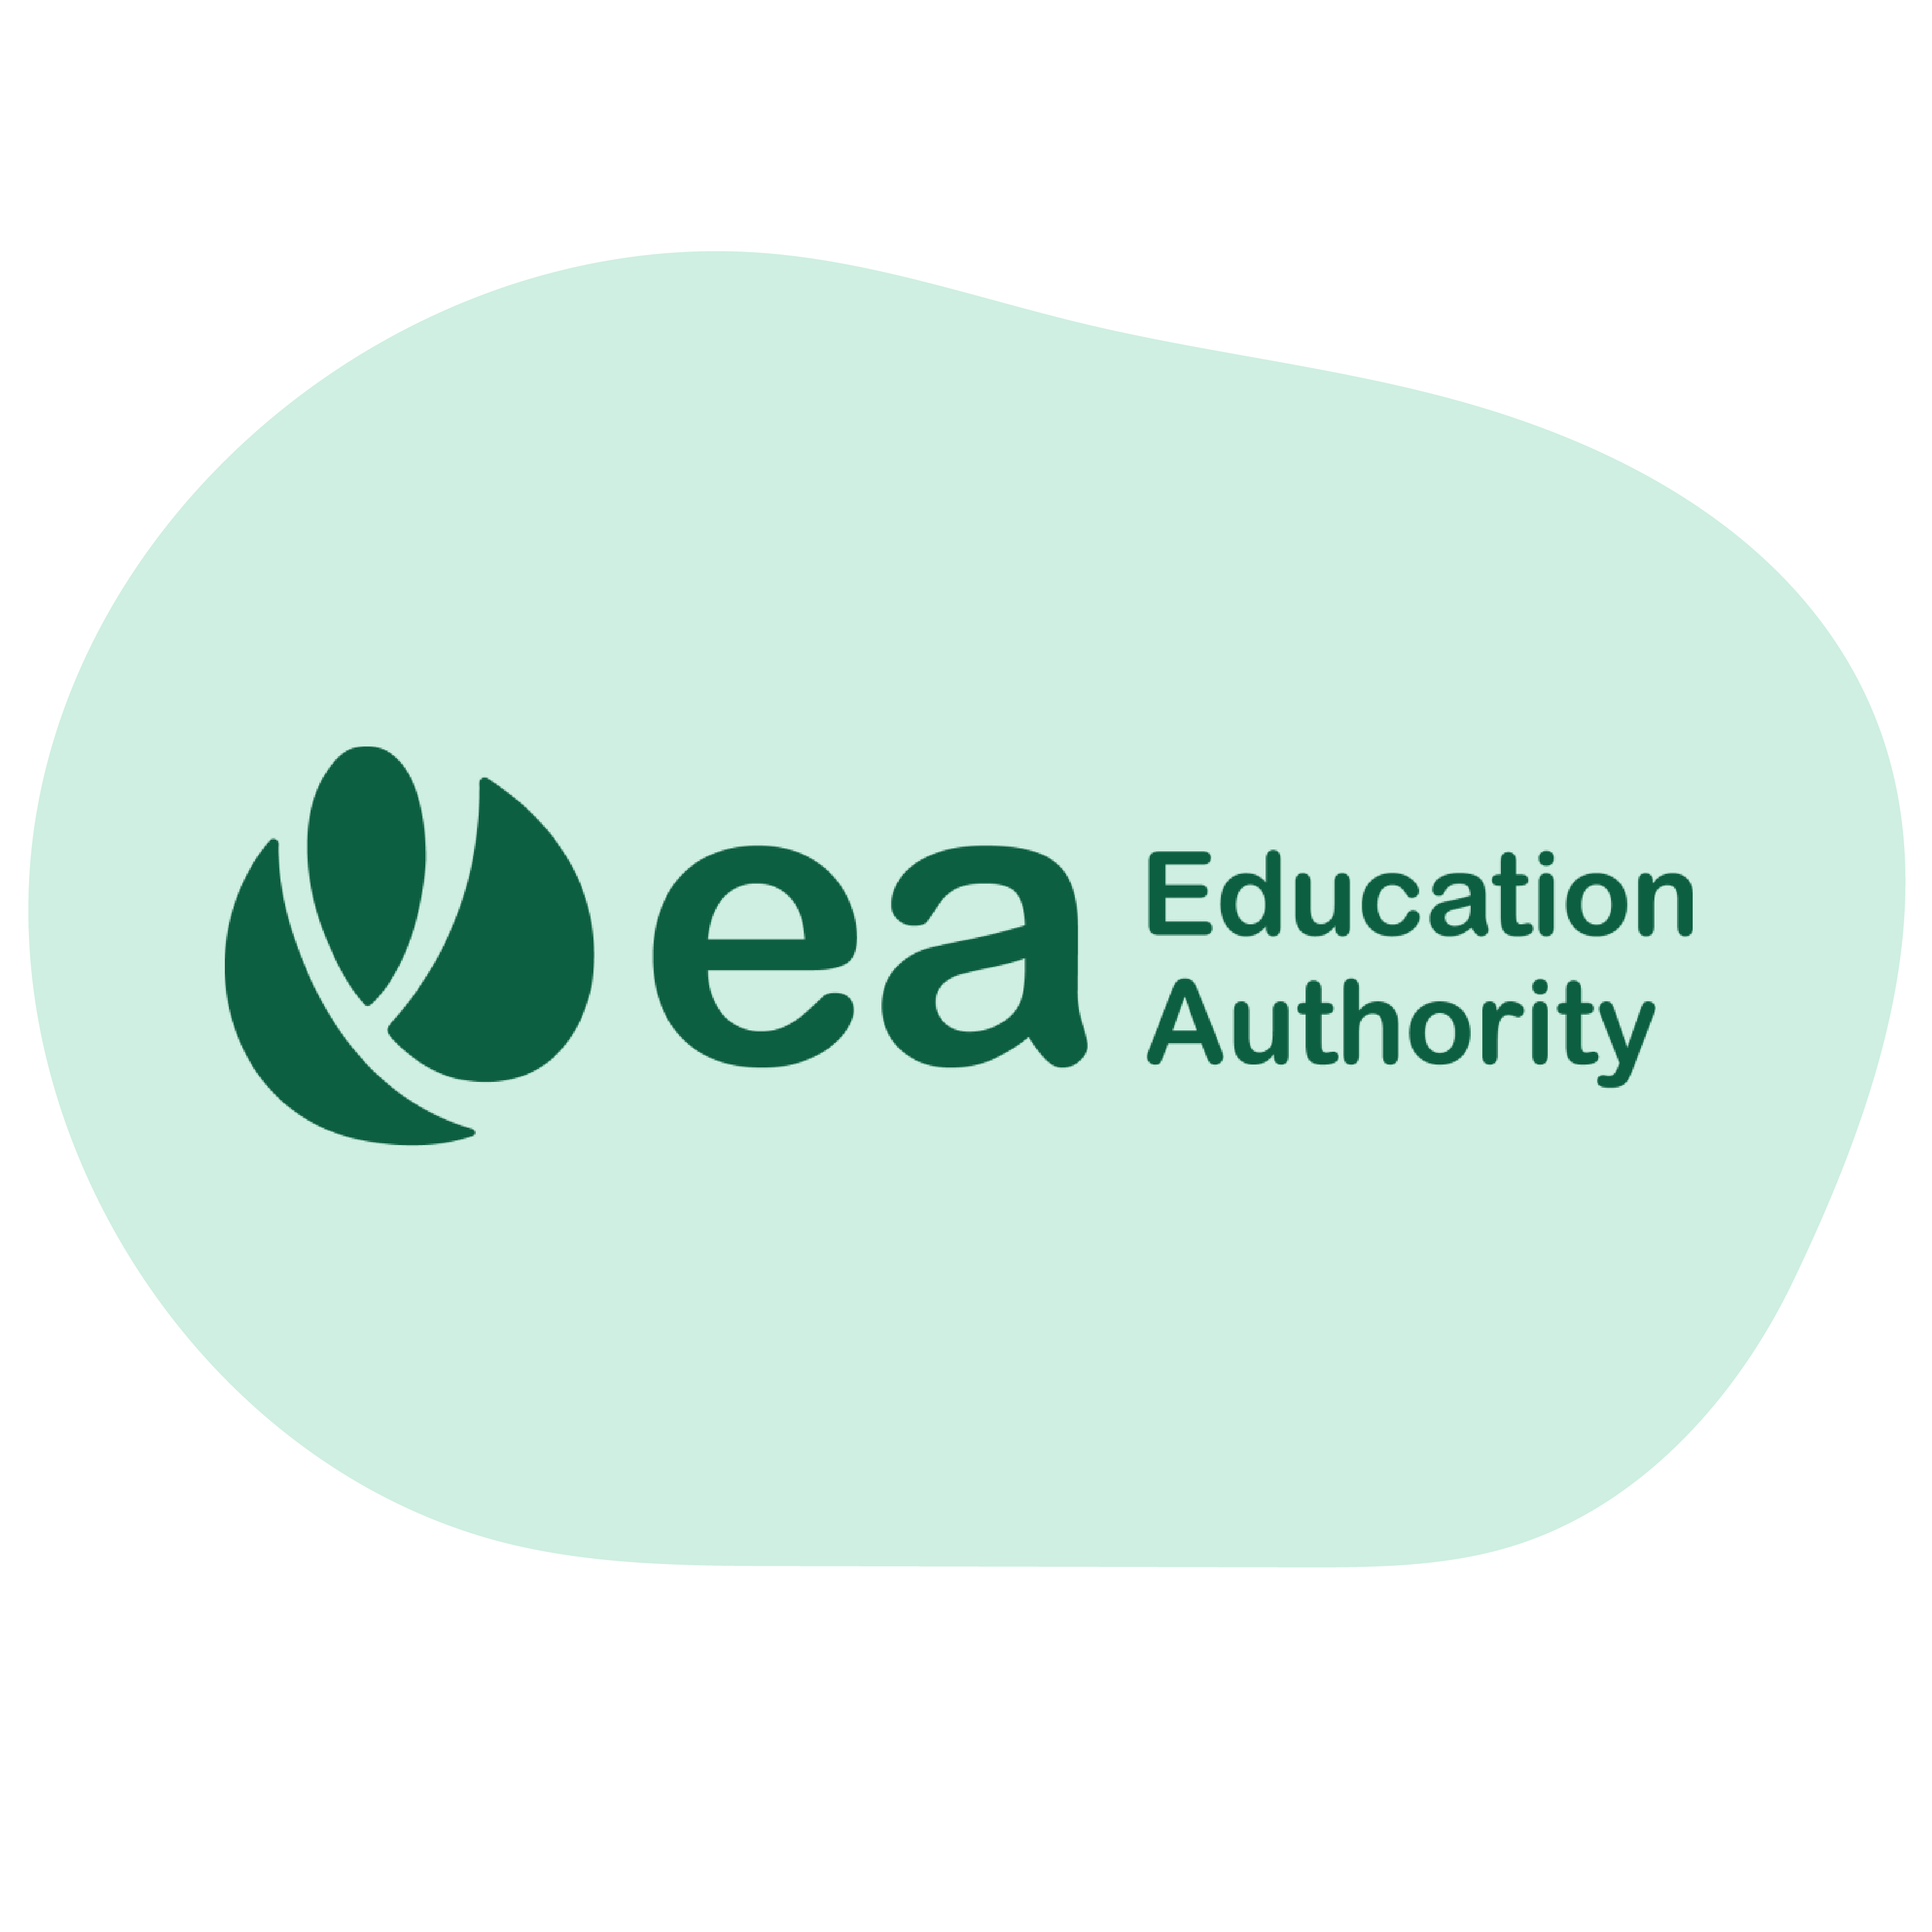 Education Authority Queue-it testimonial